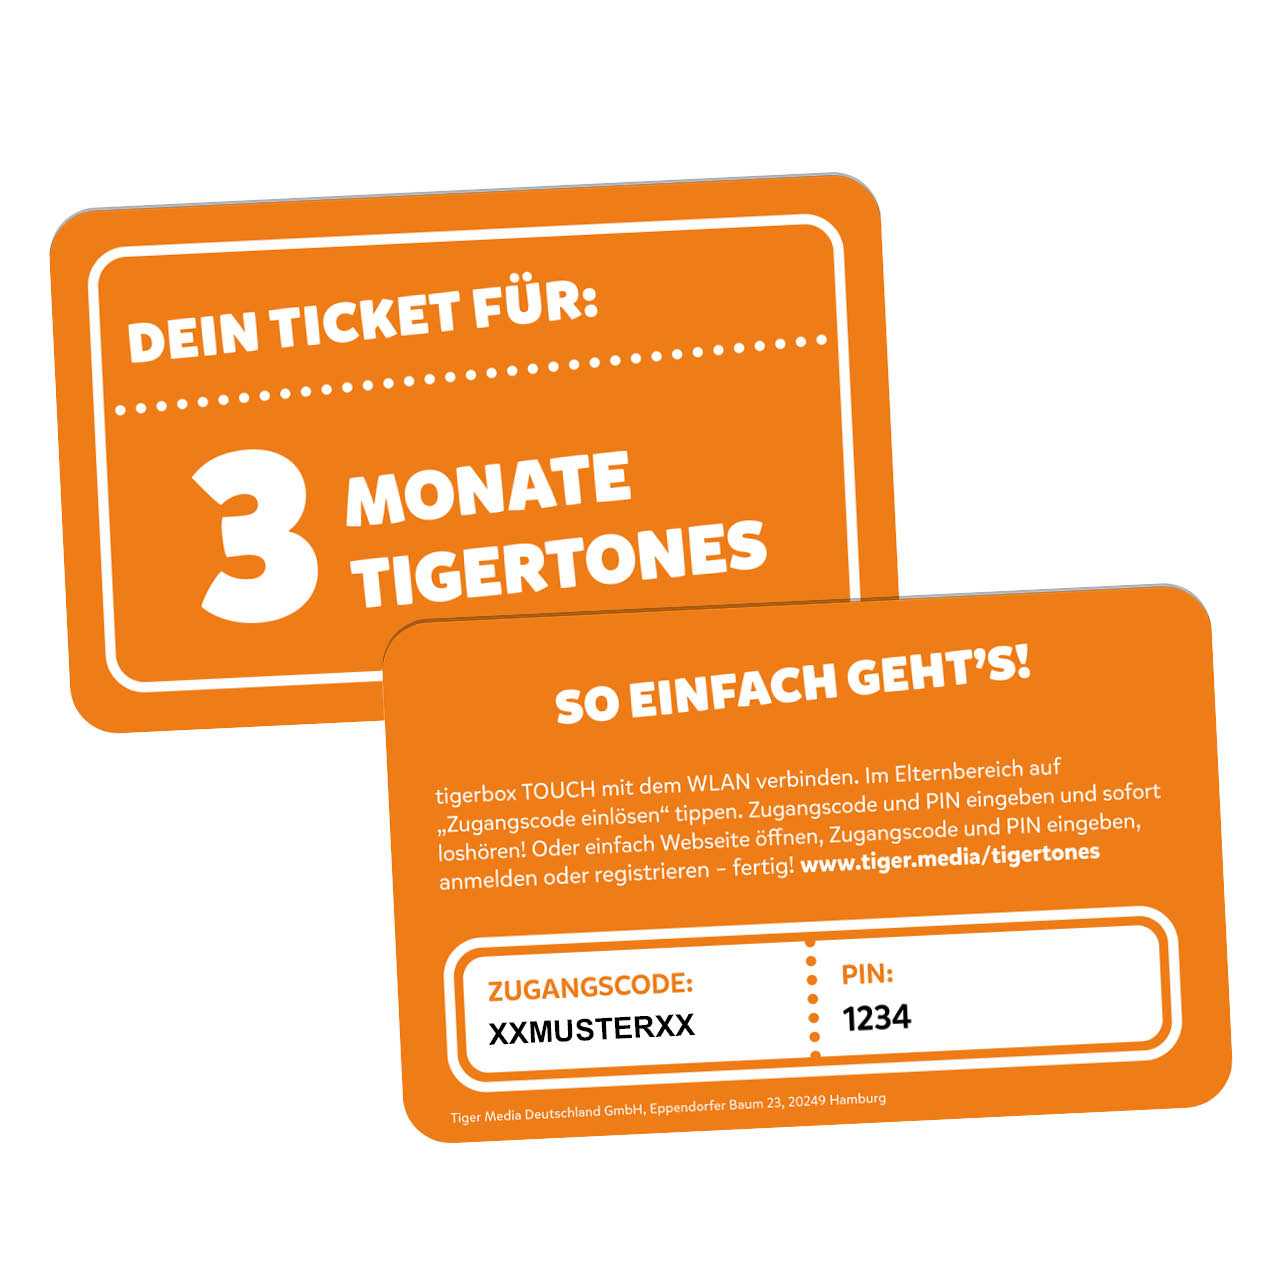 Tigerticket – 3 Monate Zugang zu tigertones